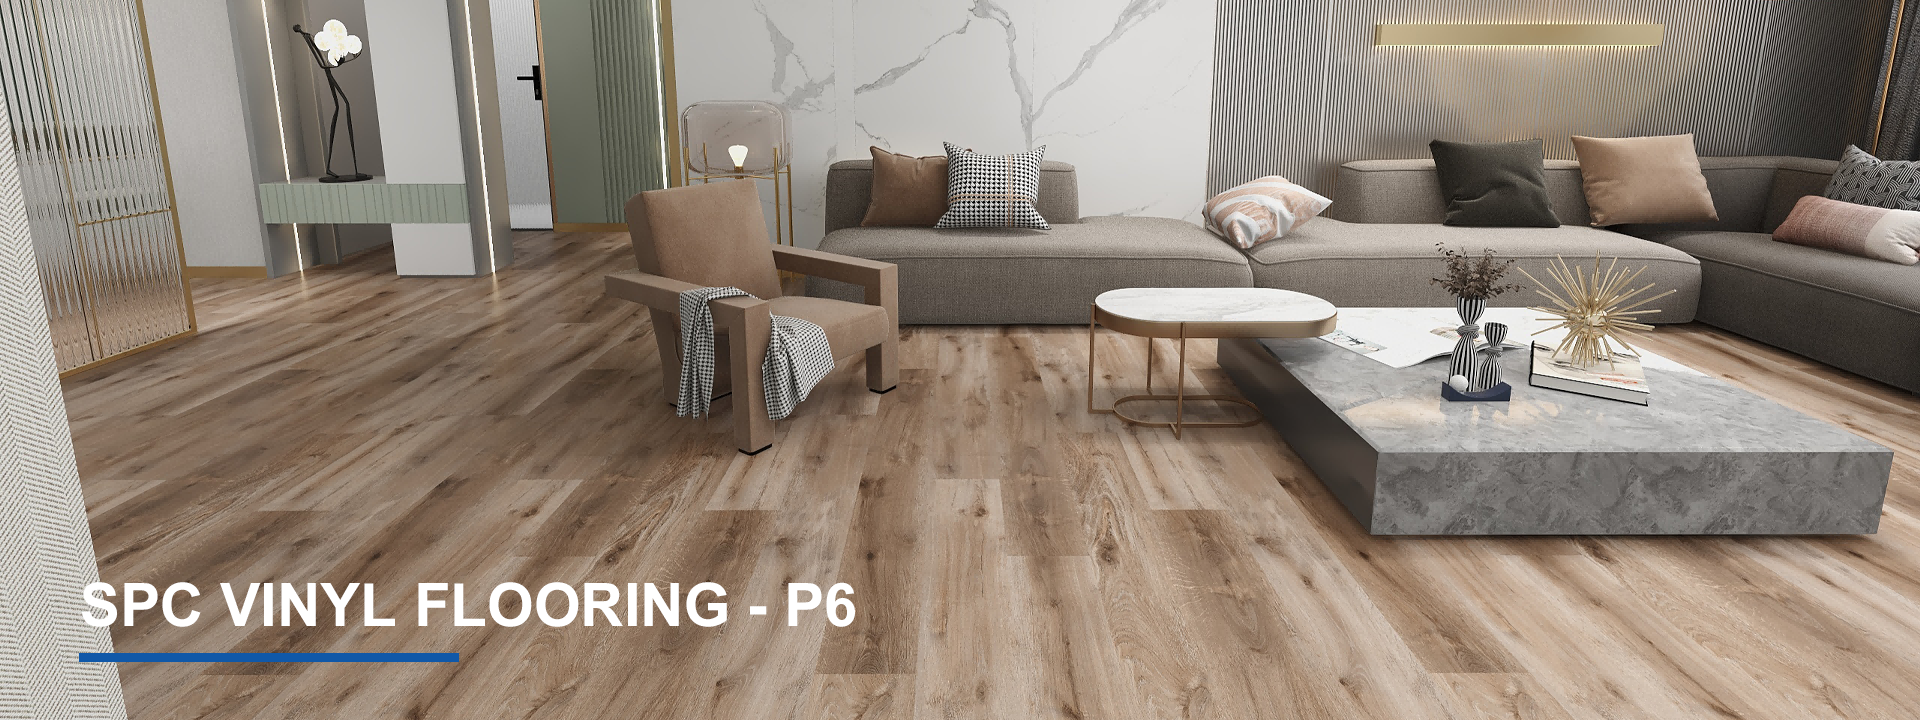 6mm SPC flooring price